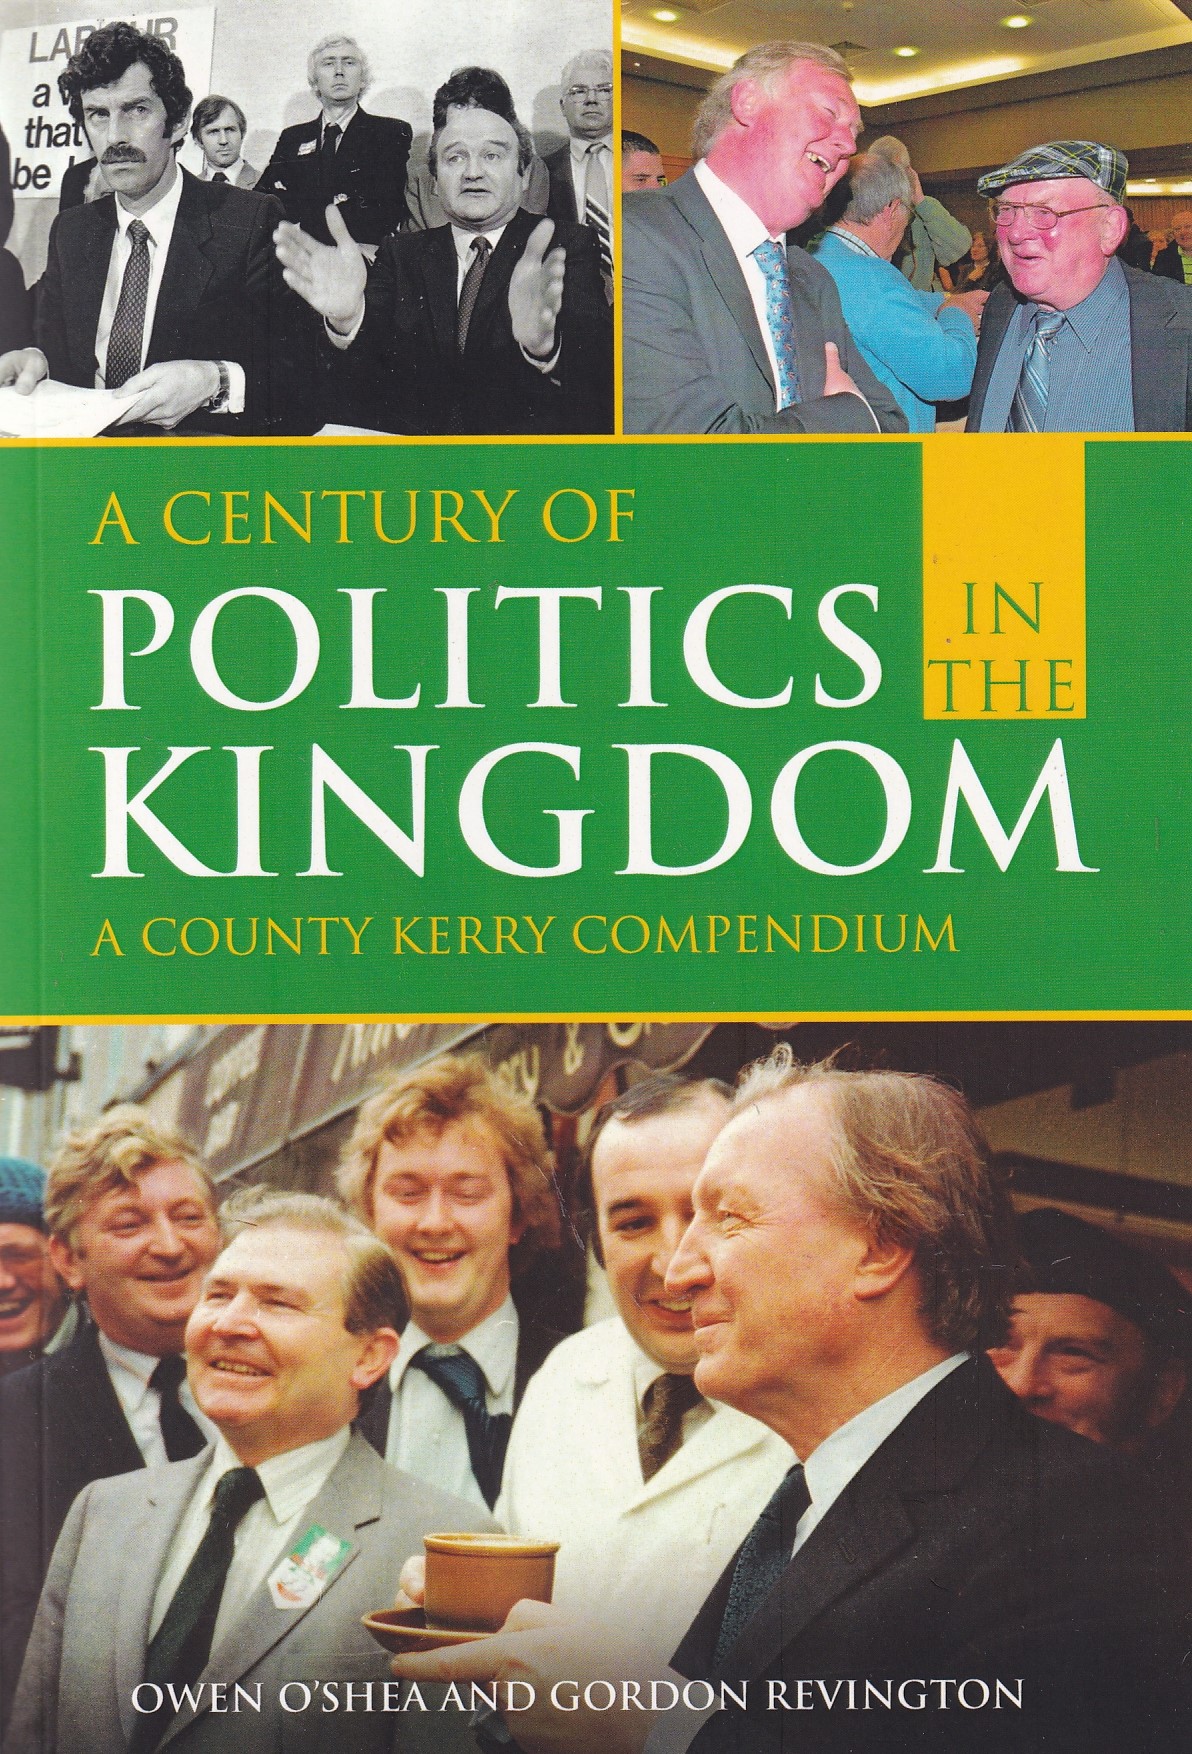 A Century of Politics in the kingdom by Owen O'Shea & Gordon Revington